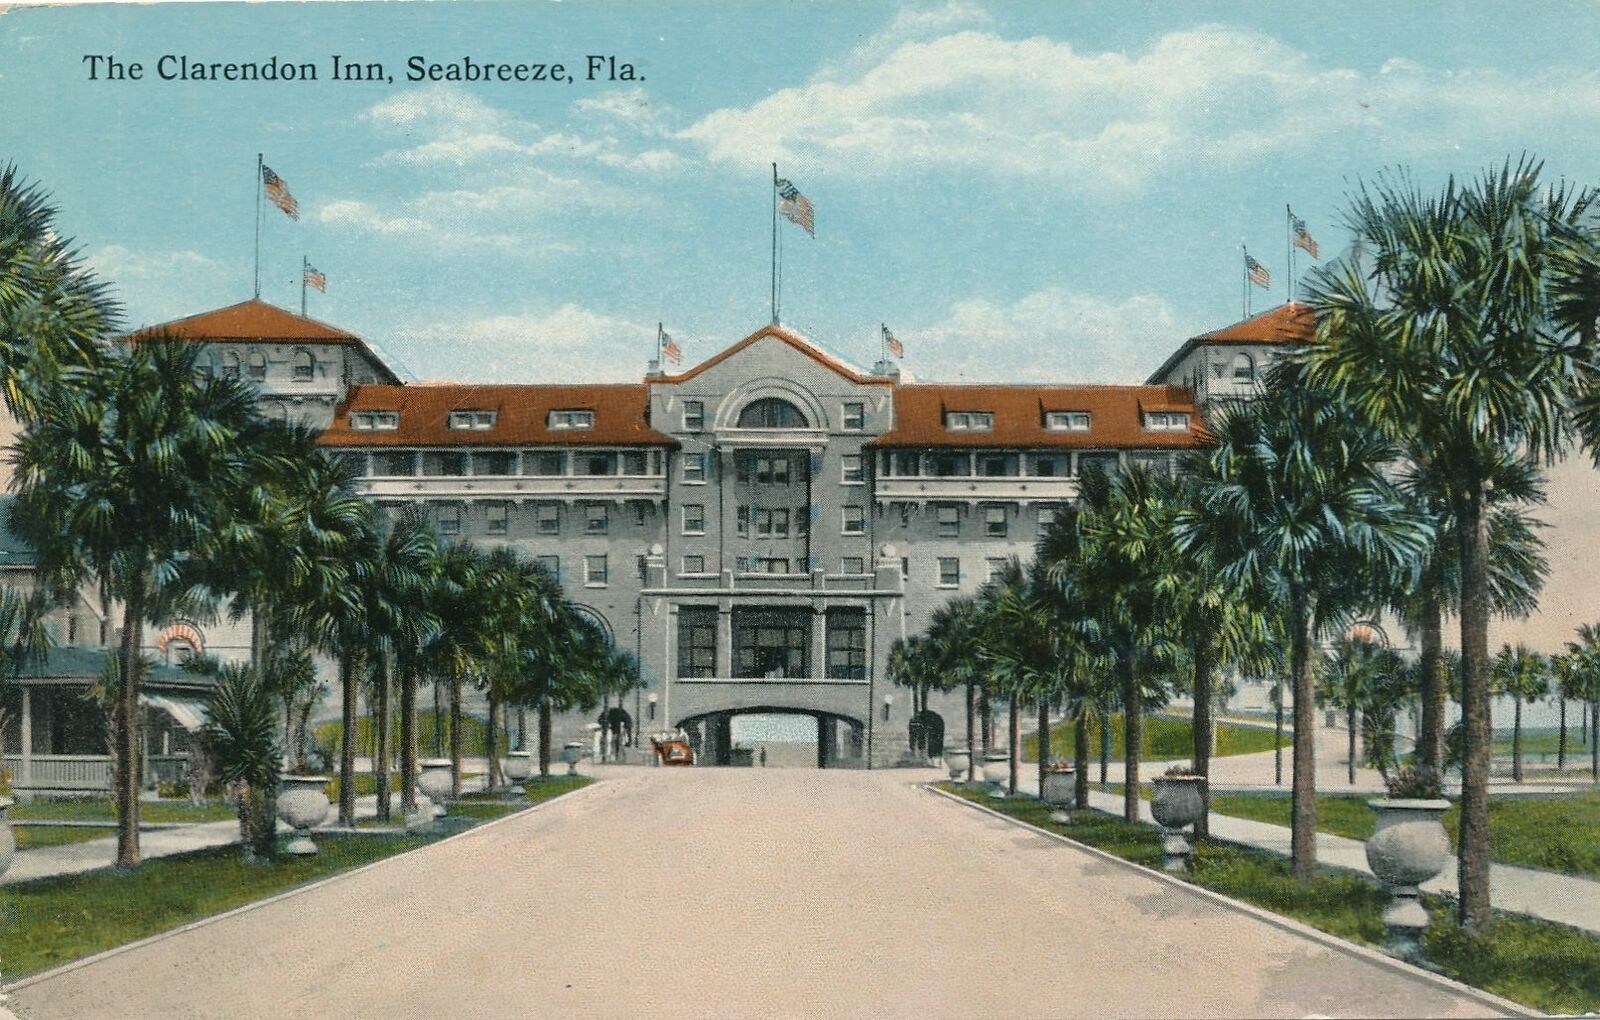 SEABREEZE FL - The Clarendon Inn